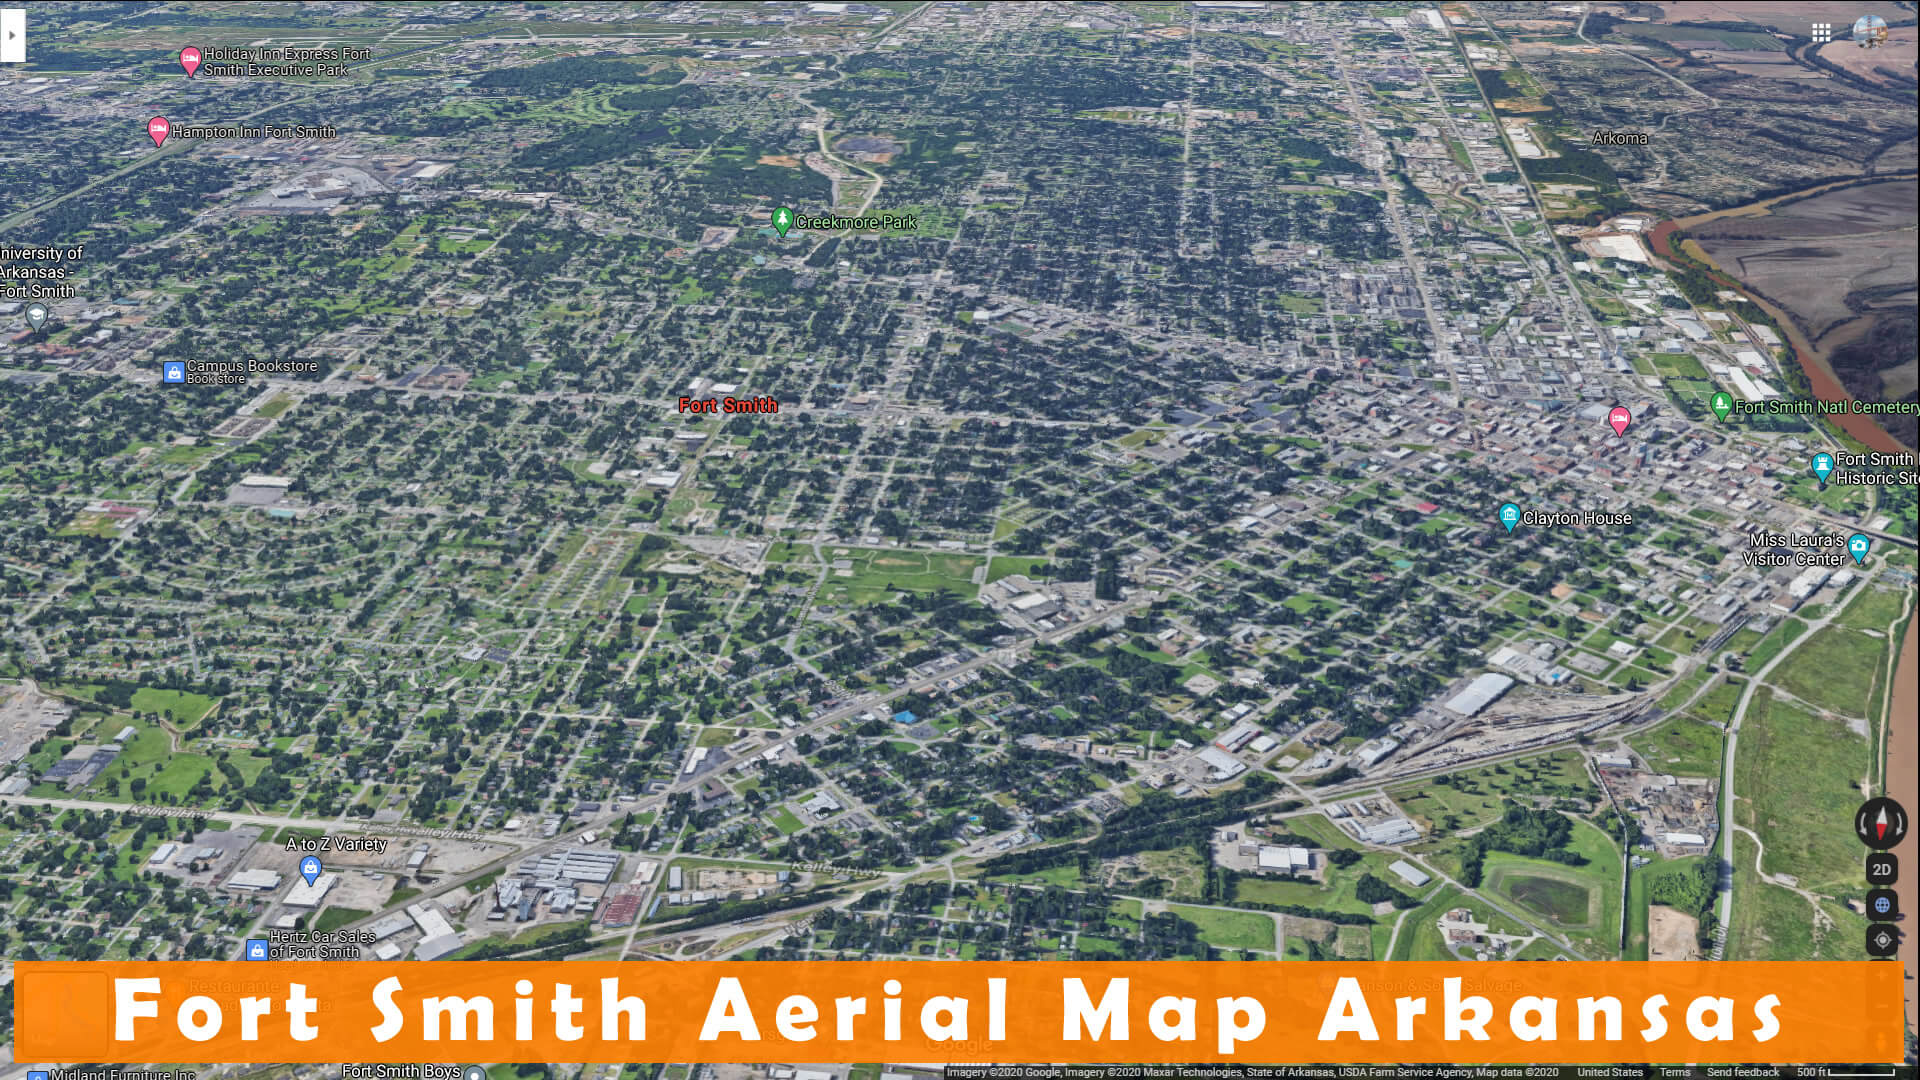 Fort Smith Aerial Map Arkansas